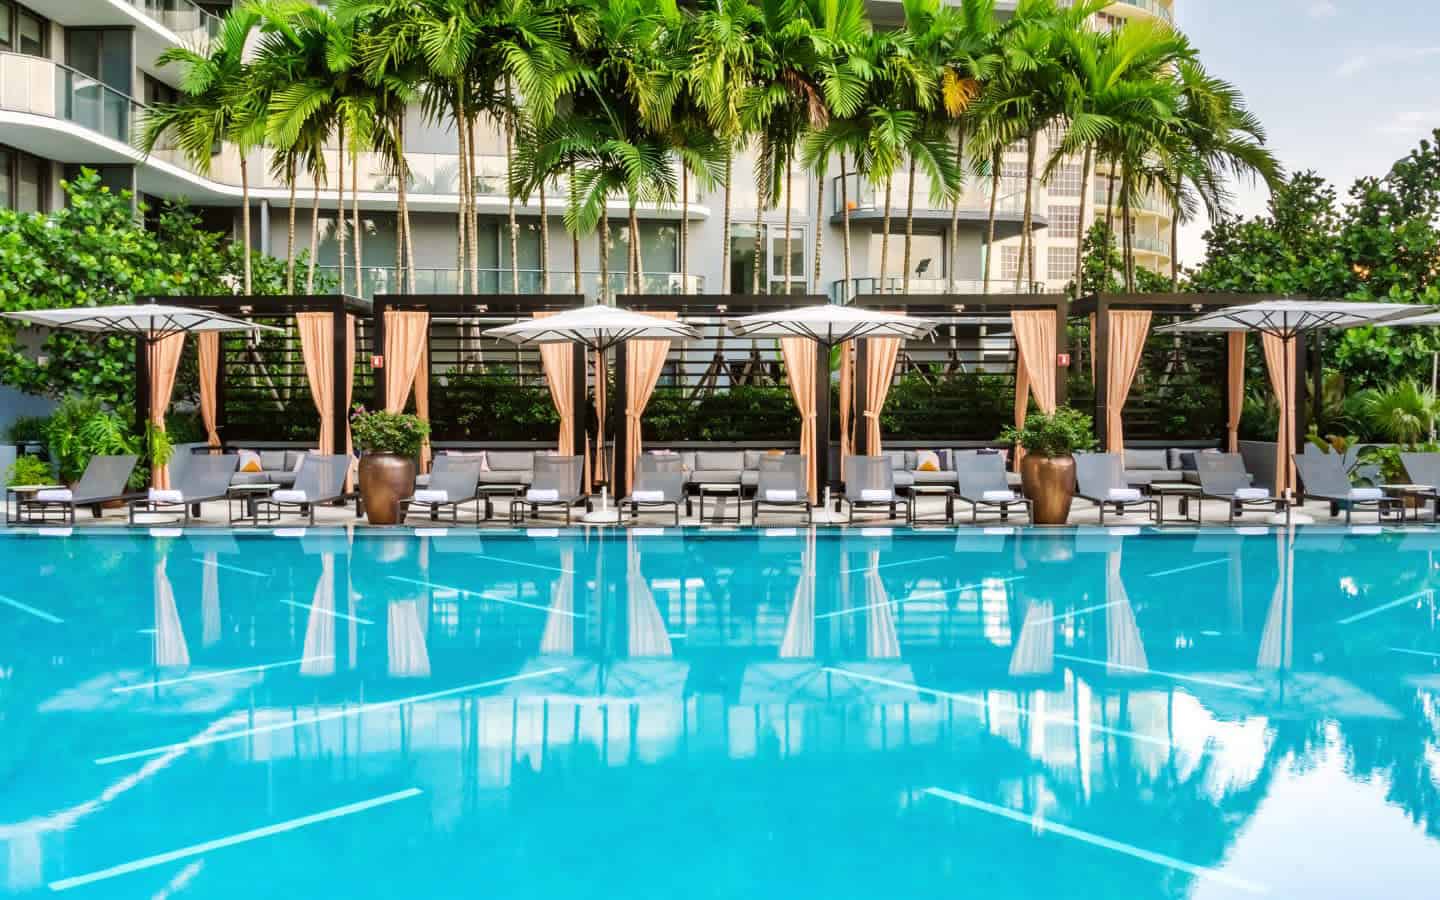 10 Airbnb-Friendly Condo Buildings in Miami